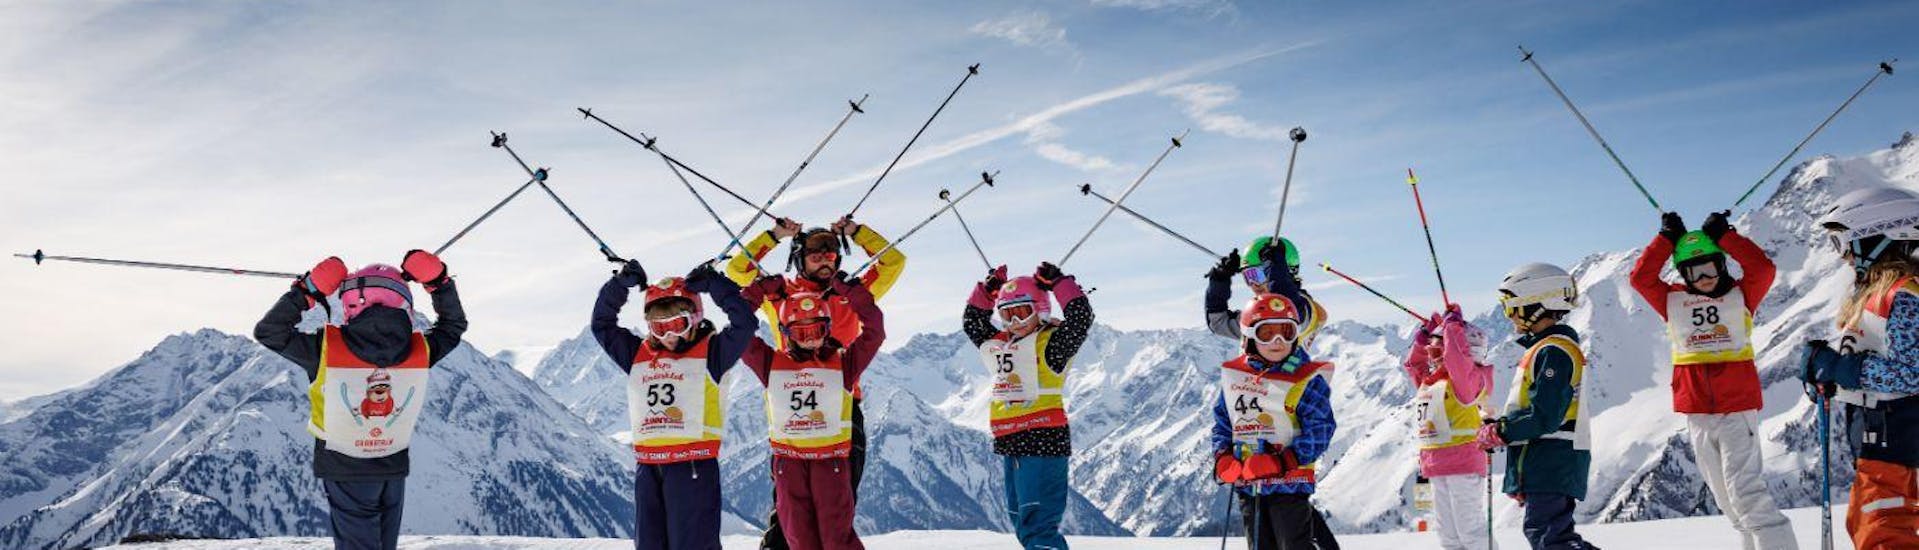 Kids Ski Lessons (4-14 y.) for Intermediate Skiers with Skischule Sunny Finkenberg - Hero image